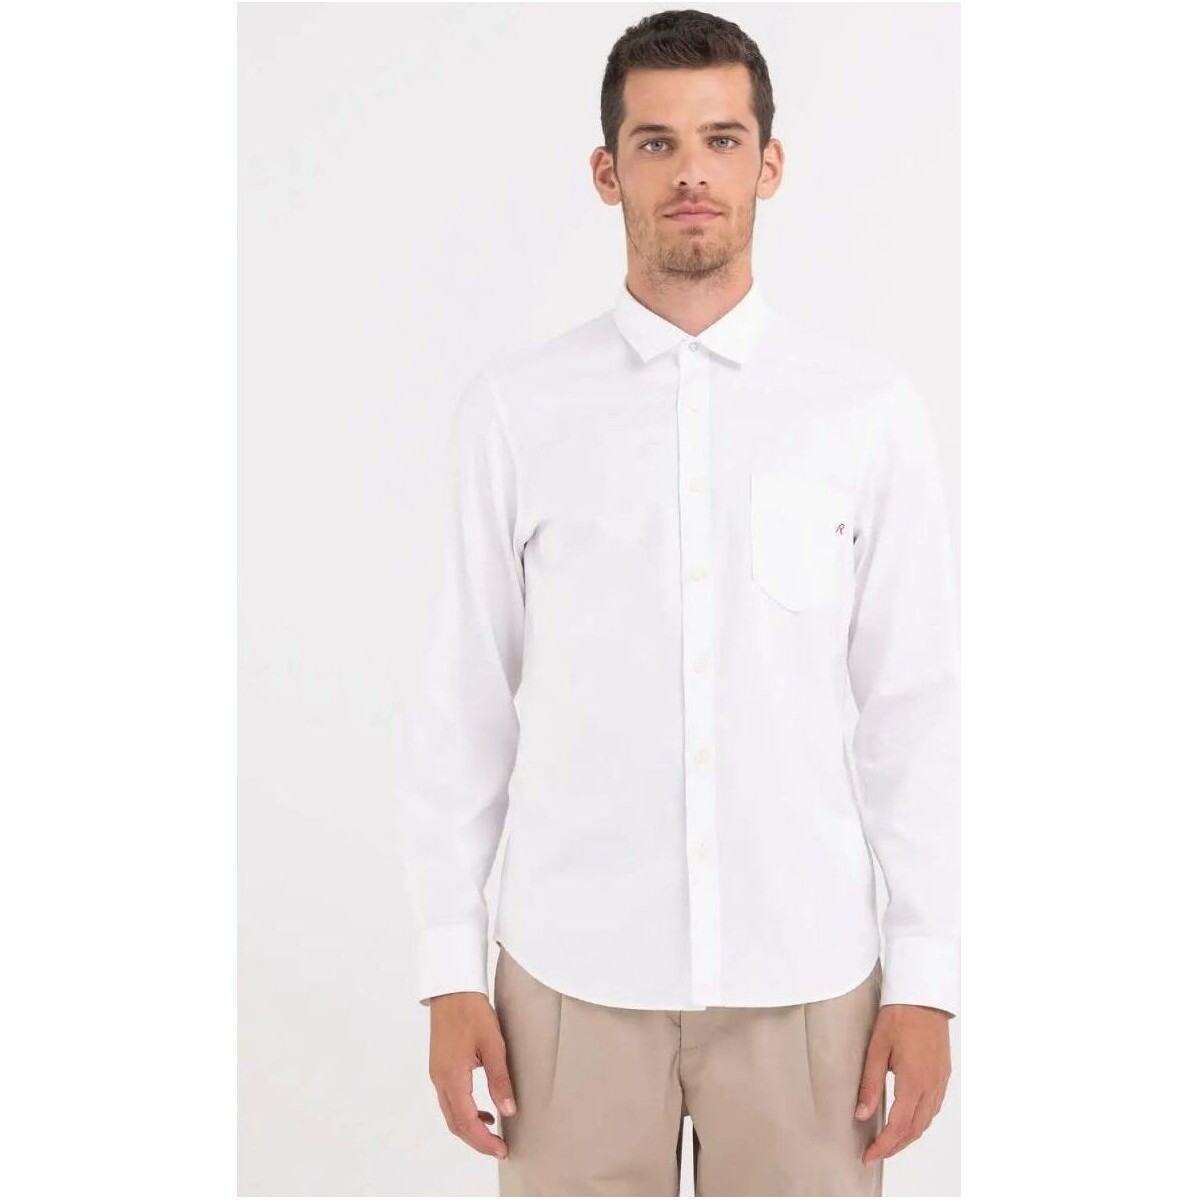 Textil Homem Camisas mangas comprida Replay M4106.84922G-001 Branco